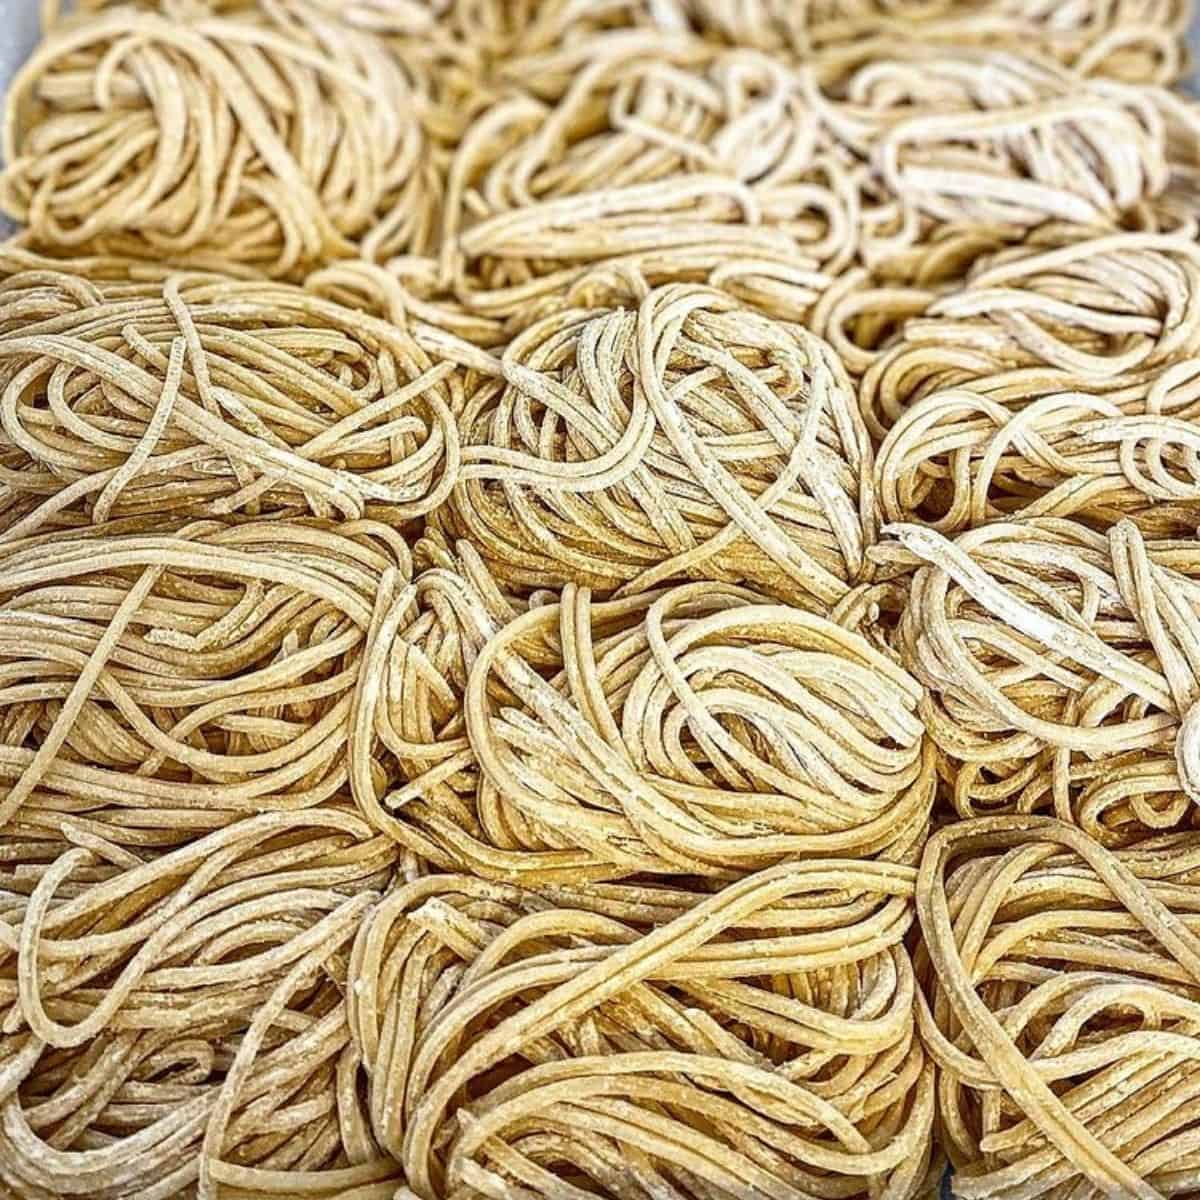 Nothing beats handmade long life noodles